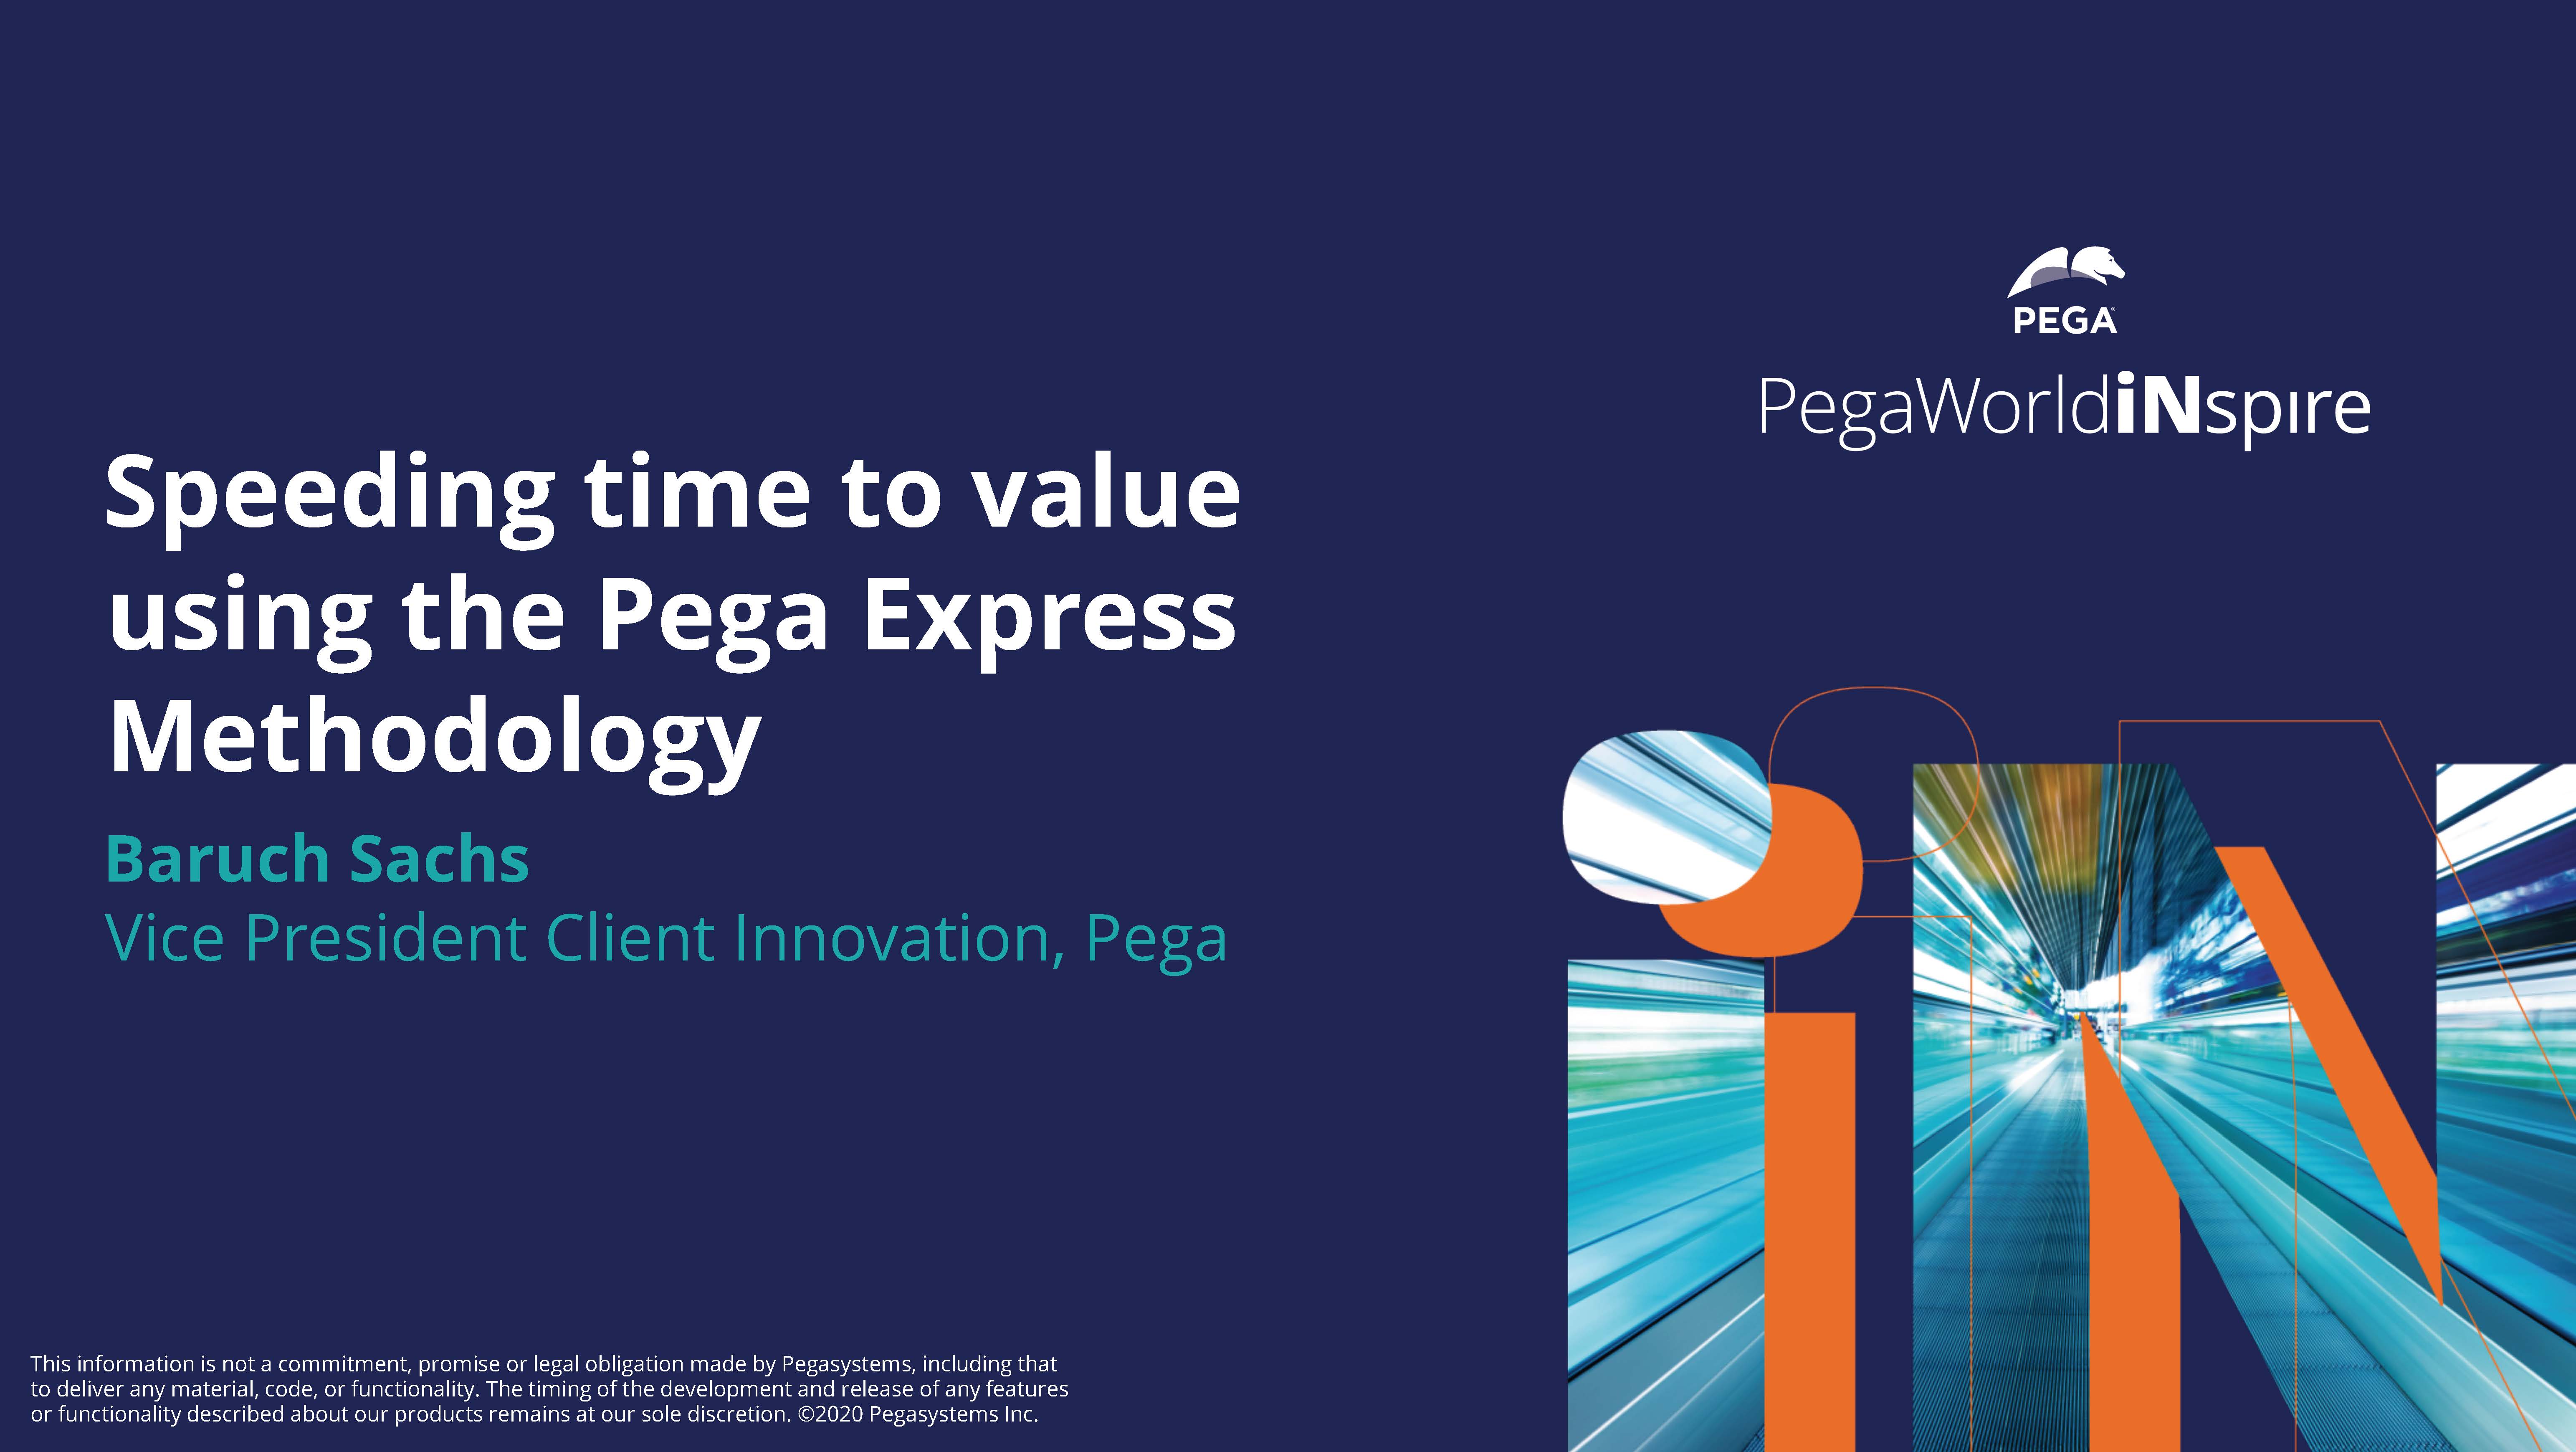 PegaWorld iNspire 2020 Speeding Time to Value Using the Pega Express